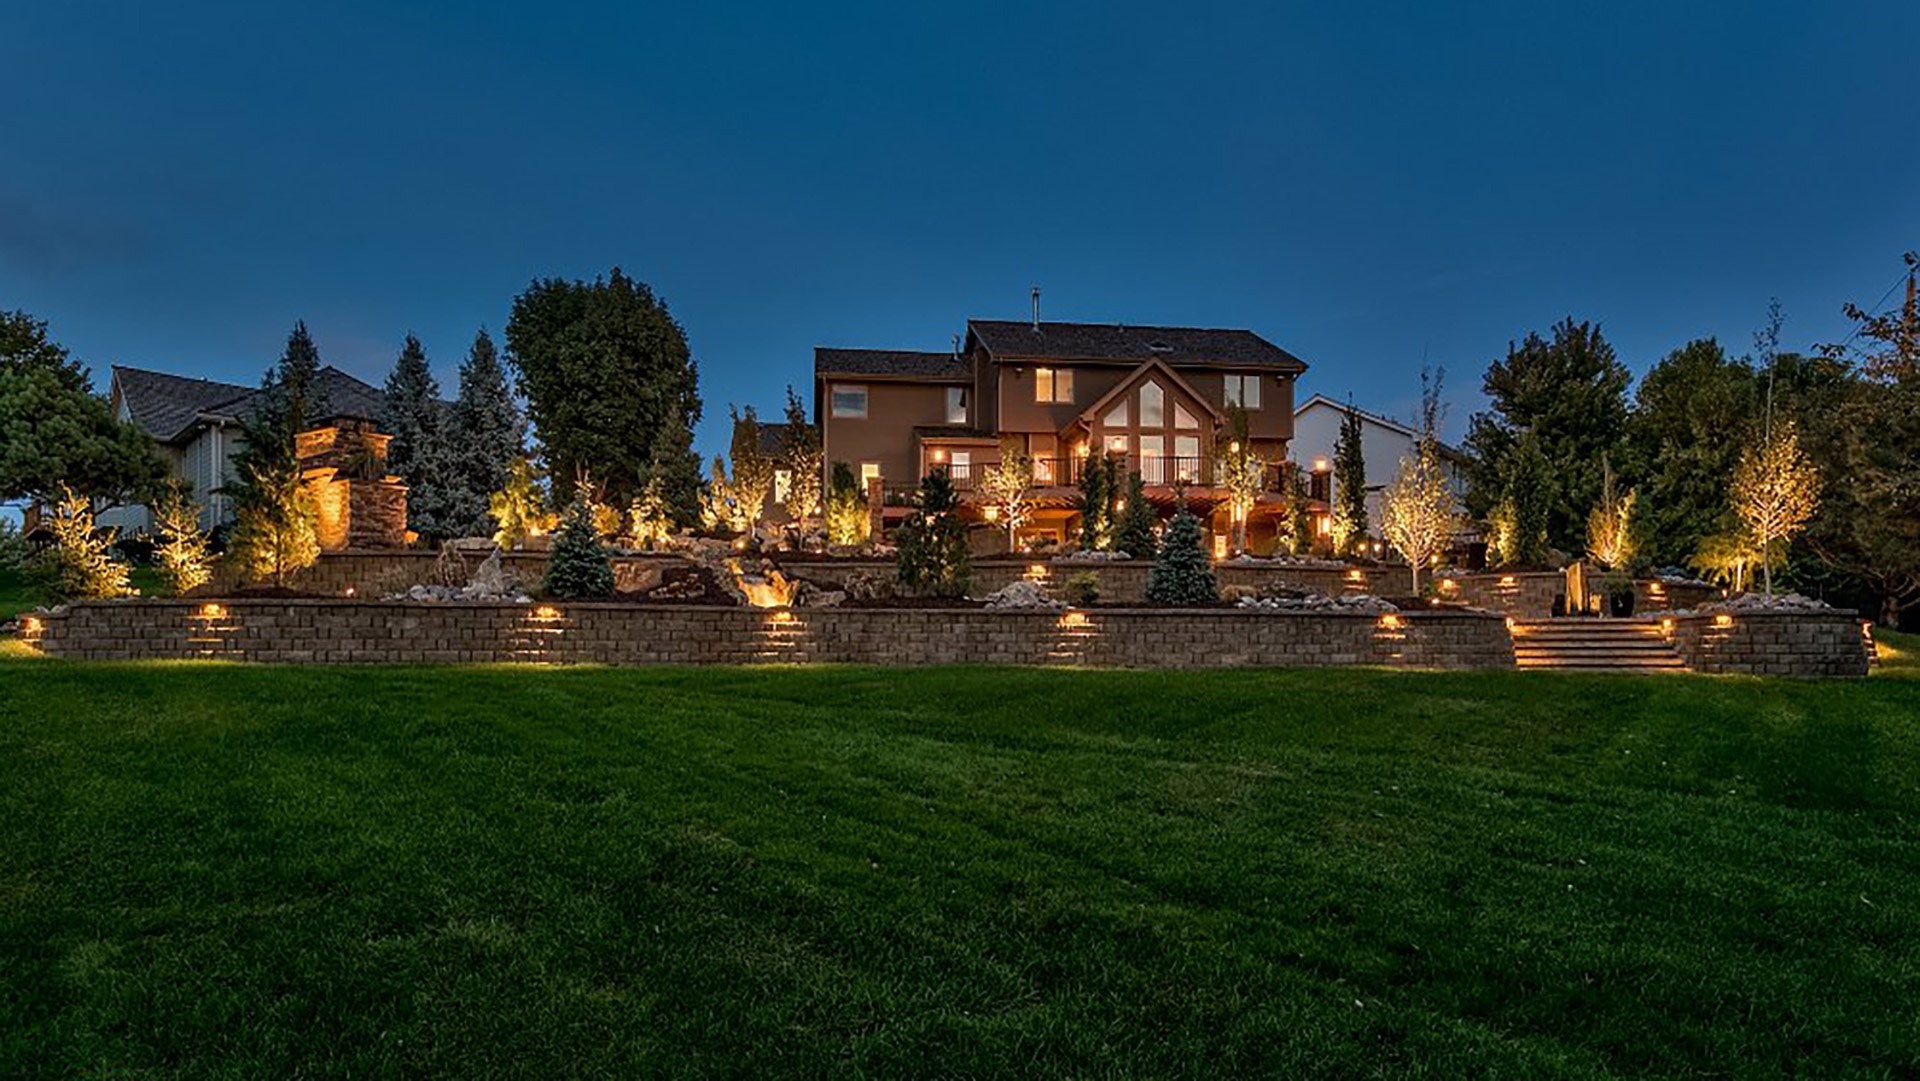 A grand home and landscape lit up at nighttime in La Vista, NE.